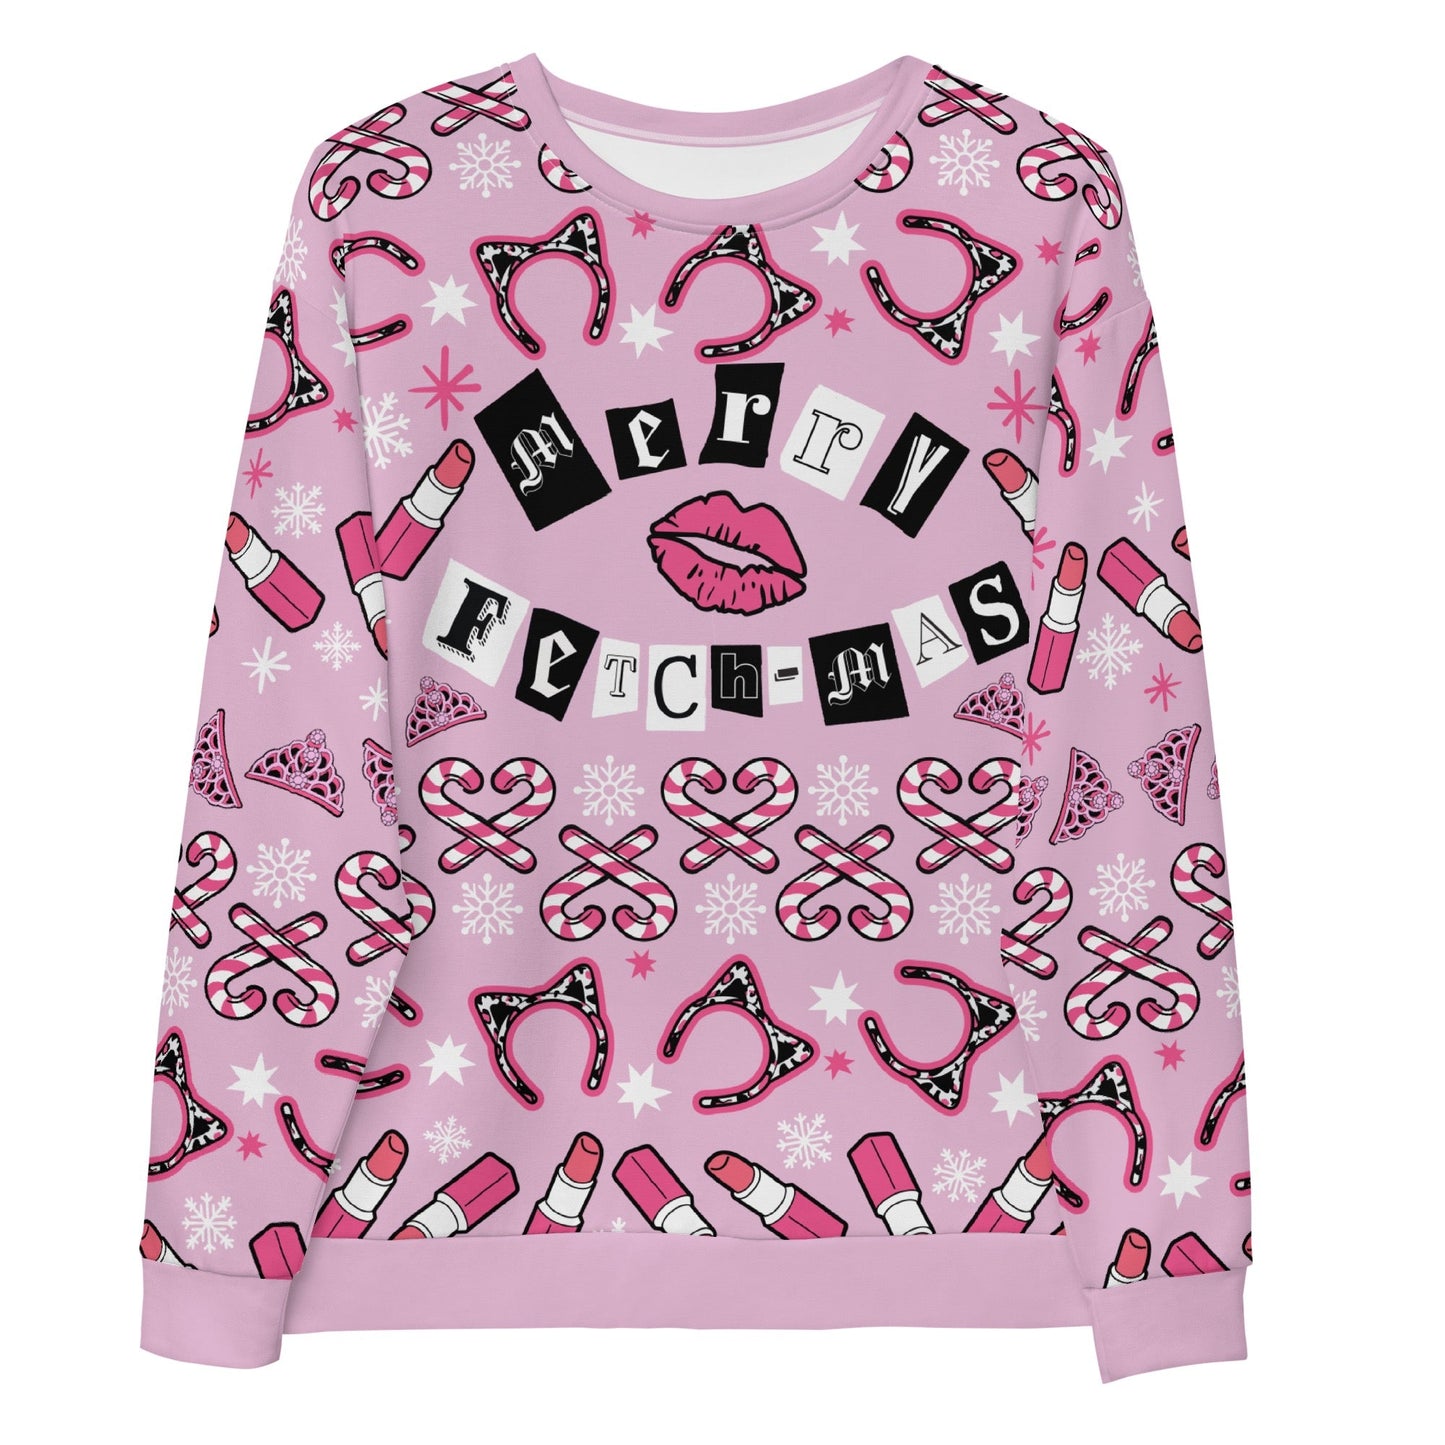 Mean Girls Merry Fetch - Mas Unisex Crewneck Sweatshirt - Paramount Shop